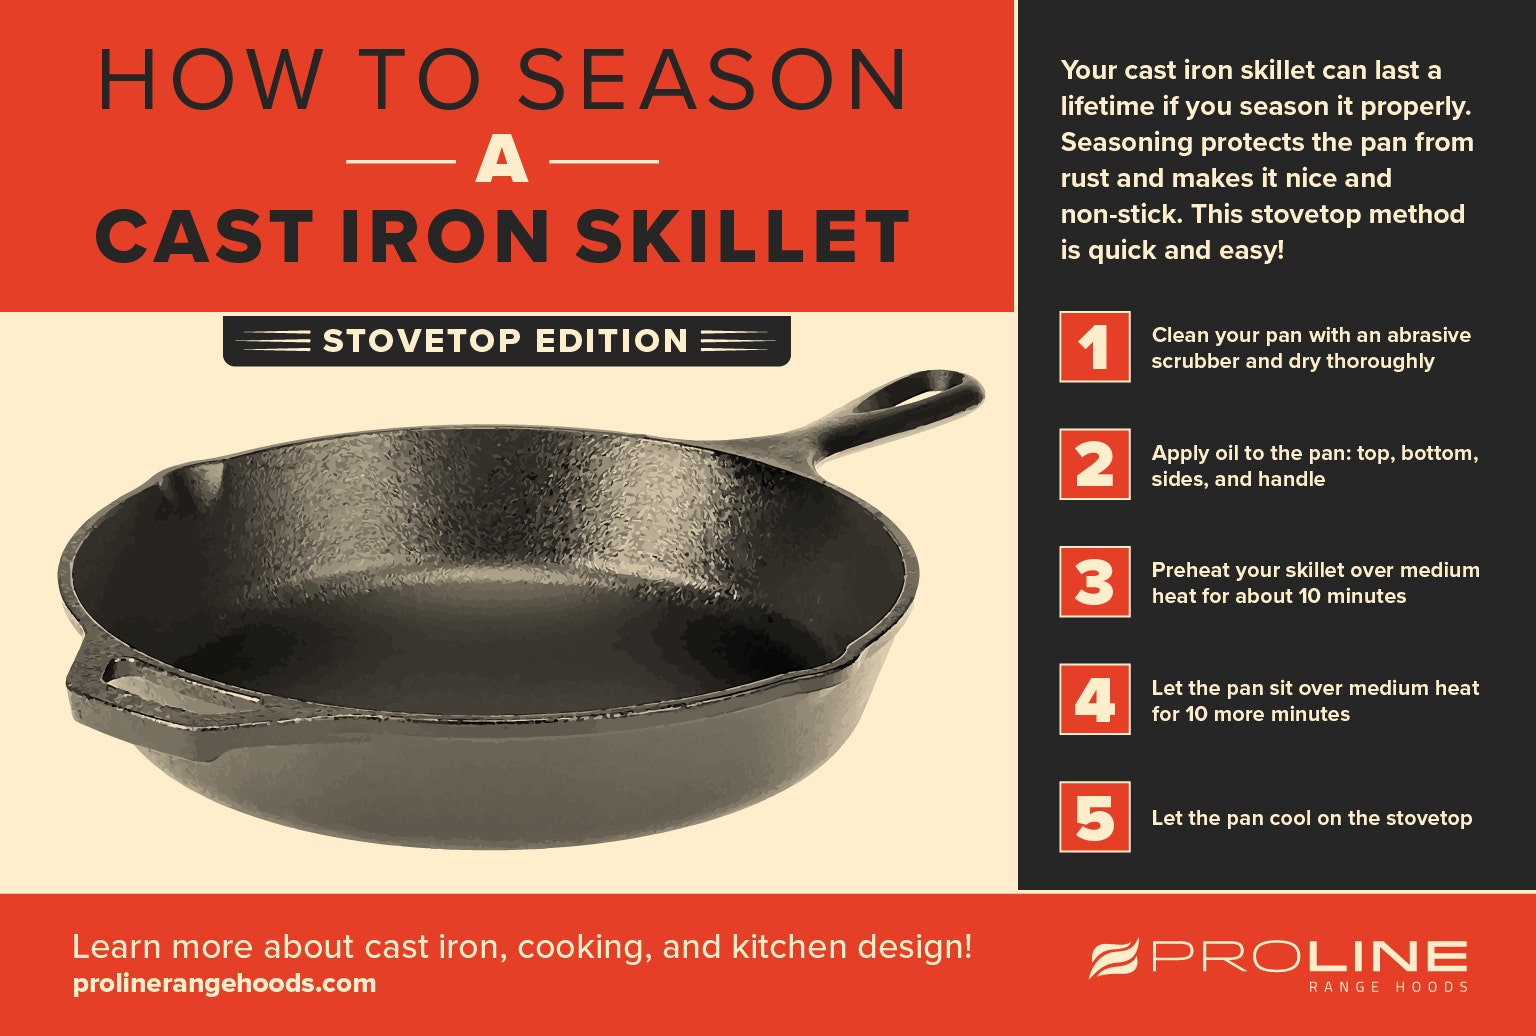 https://www.prolinerangehoods.com/blog/wp-content/uploads/2022/01/How-to-Season-a-Cast-Iron-Skillet-Stovetop-infographic-1.jpg